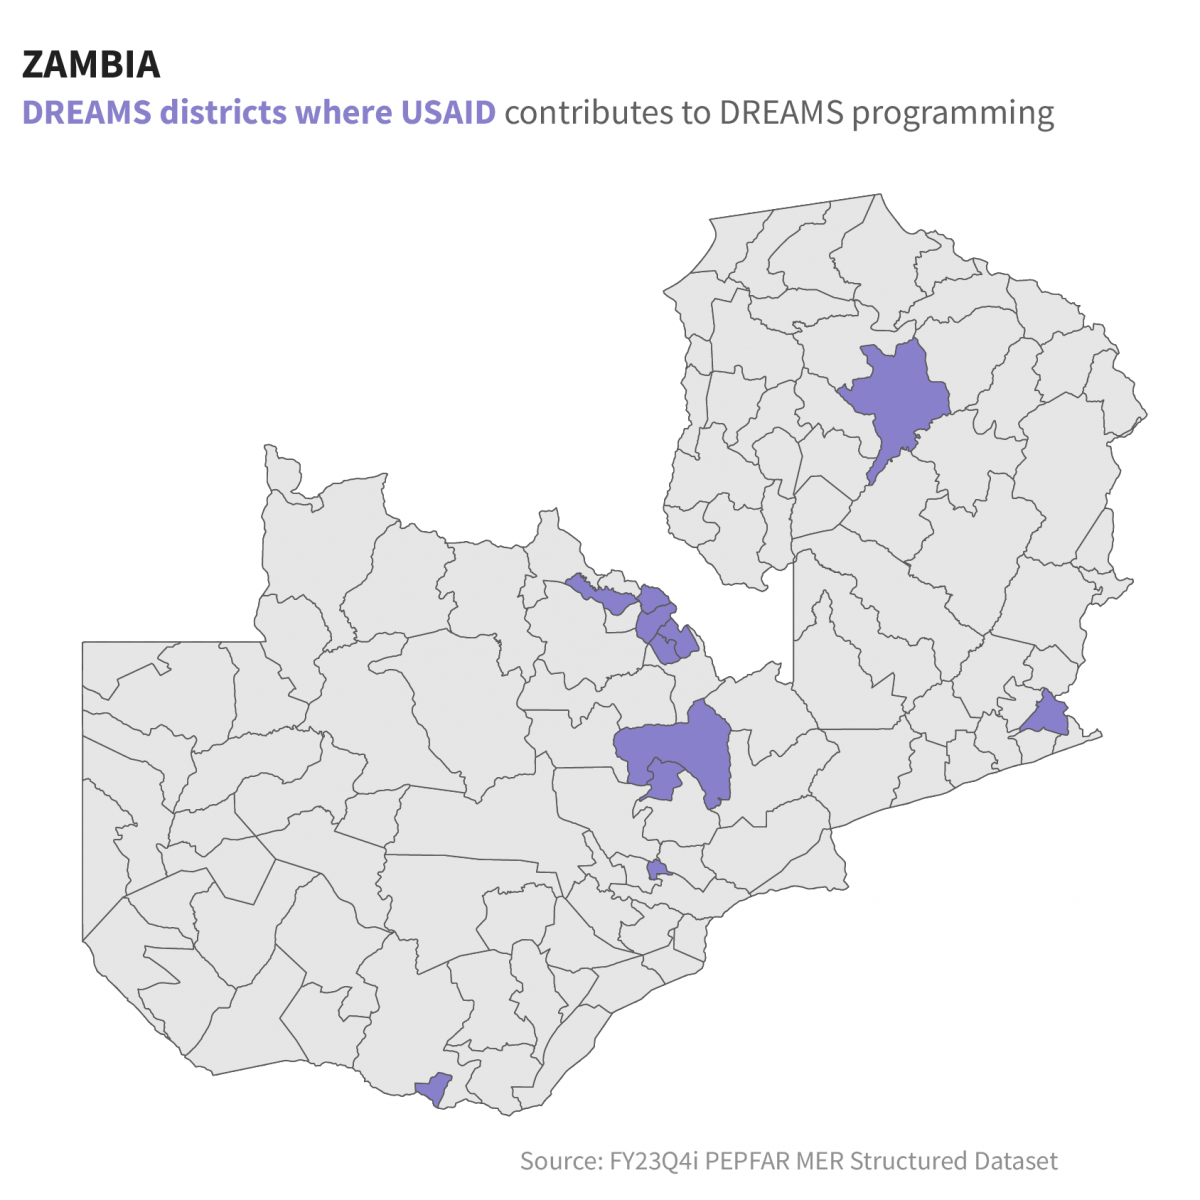 Zambia: DREAMS districts where USAID contributes to DREAMS programming